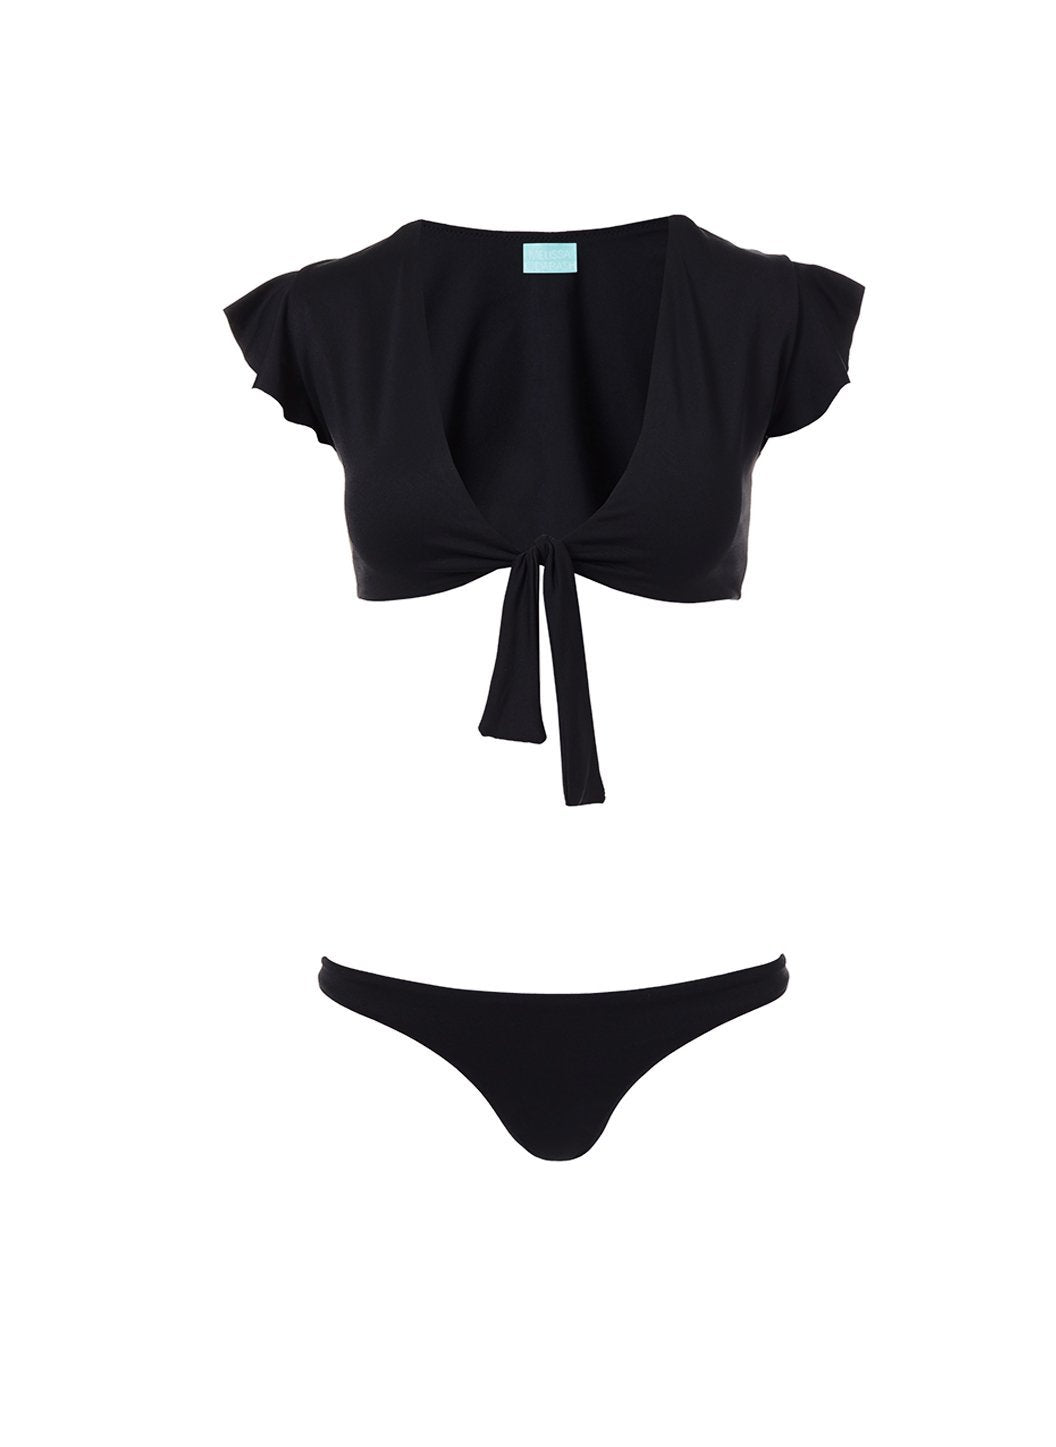 kohsamui black tiefront frill crop bikini 2019